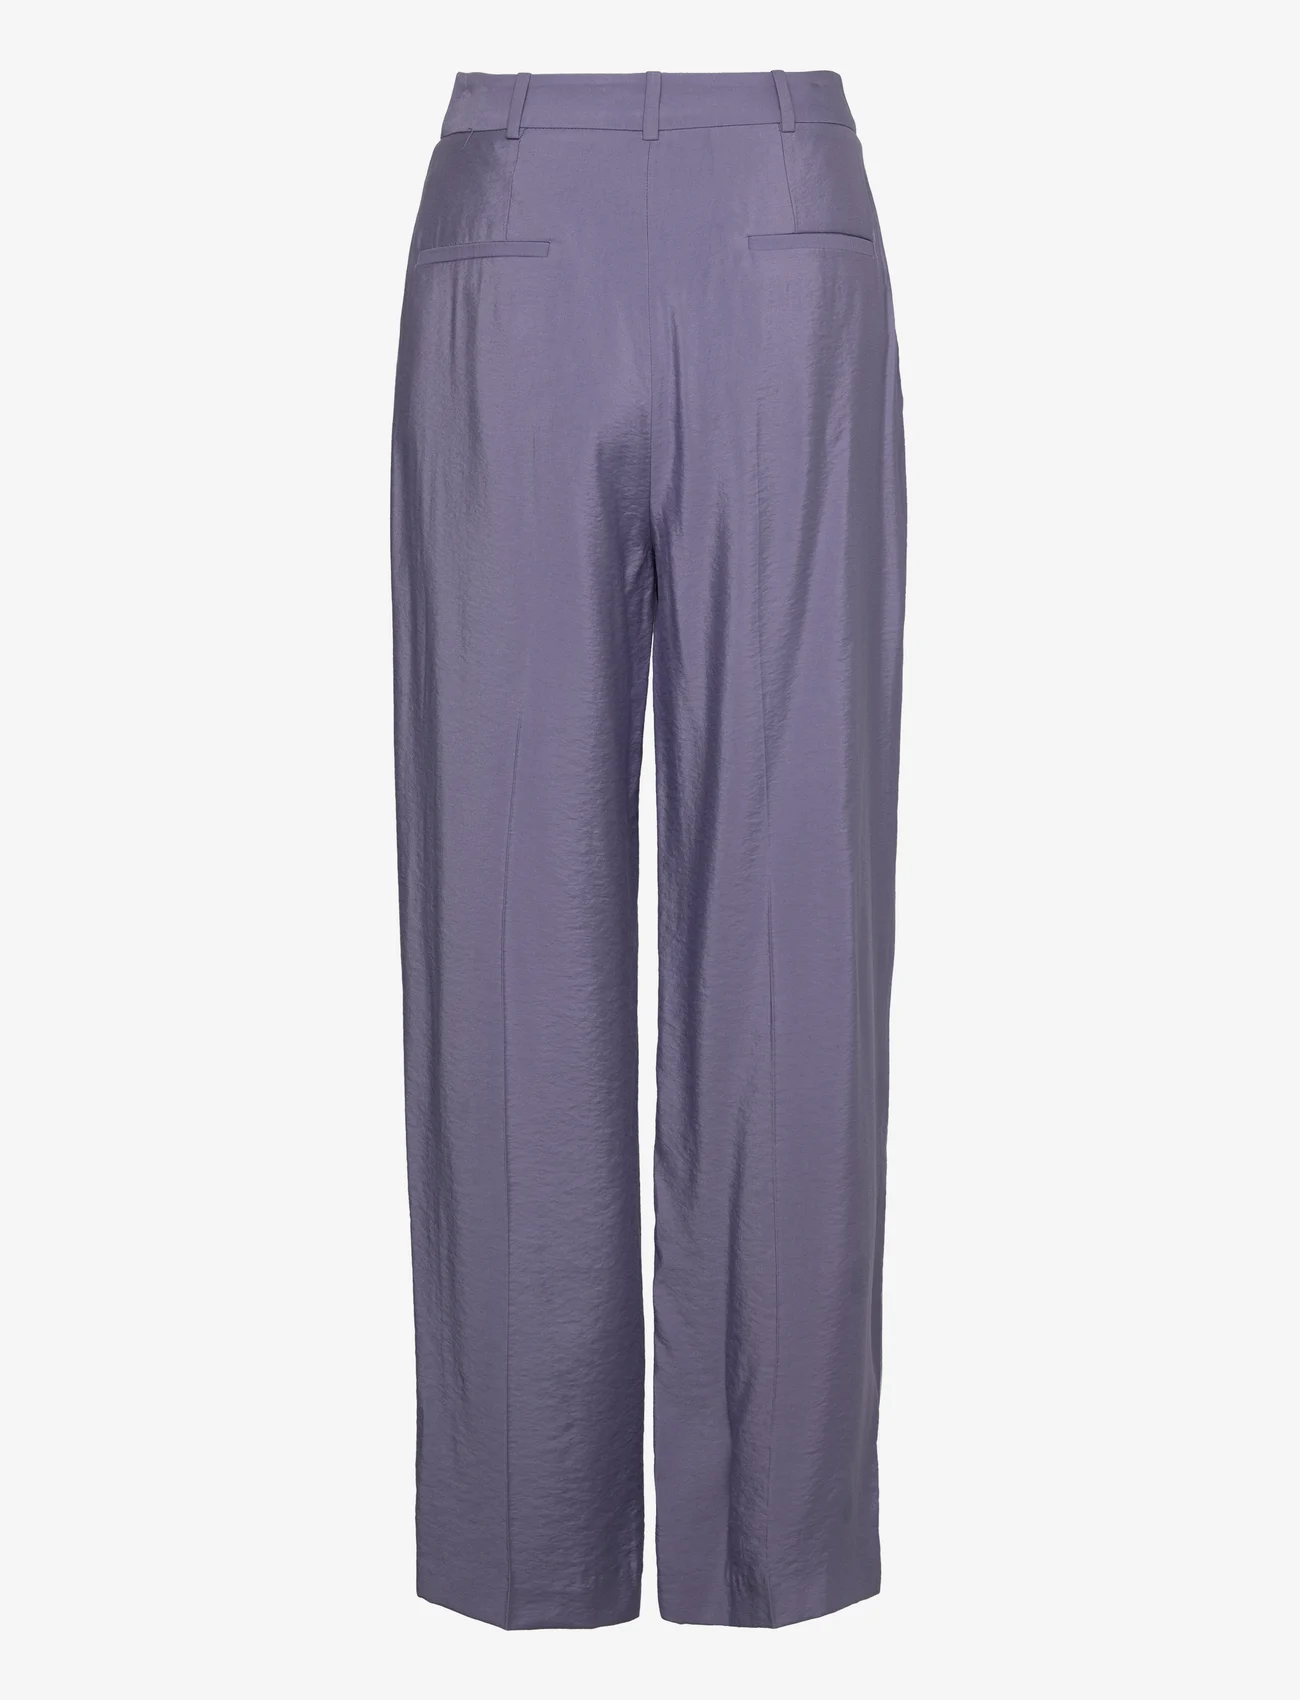 ba&sh - PANTALON HEALY - tailored trousers - lavender - 1